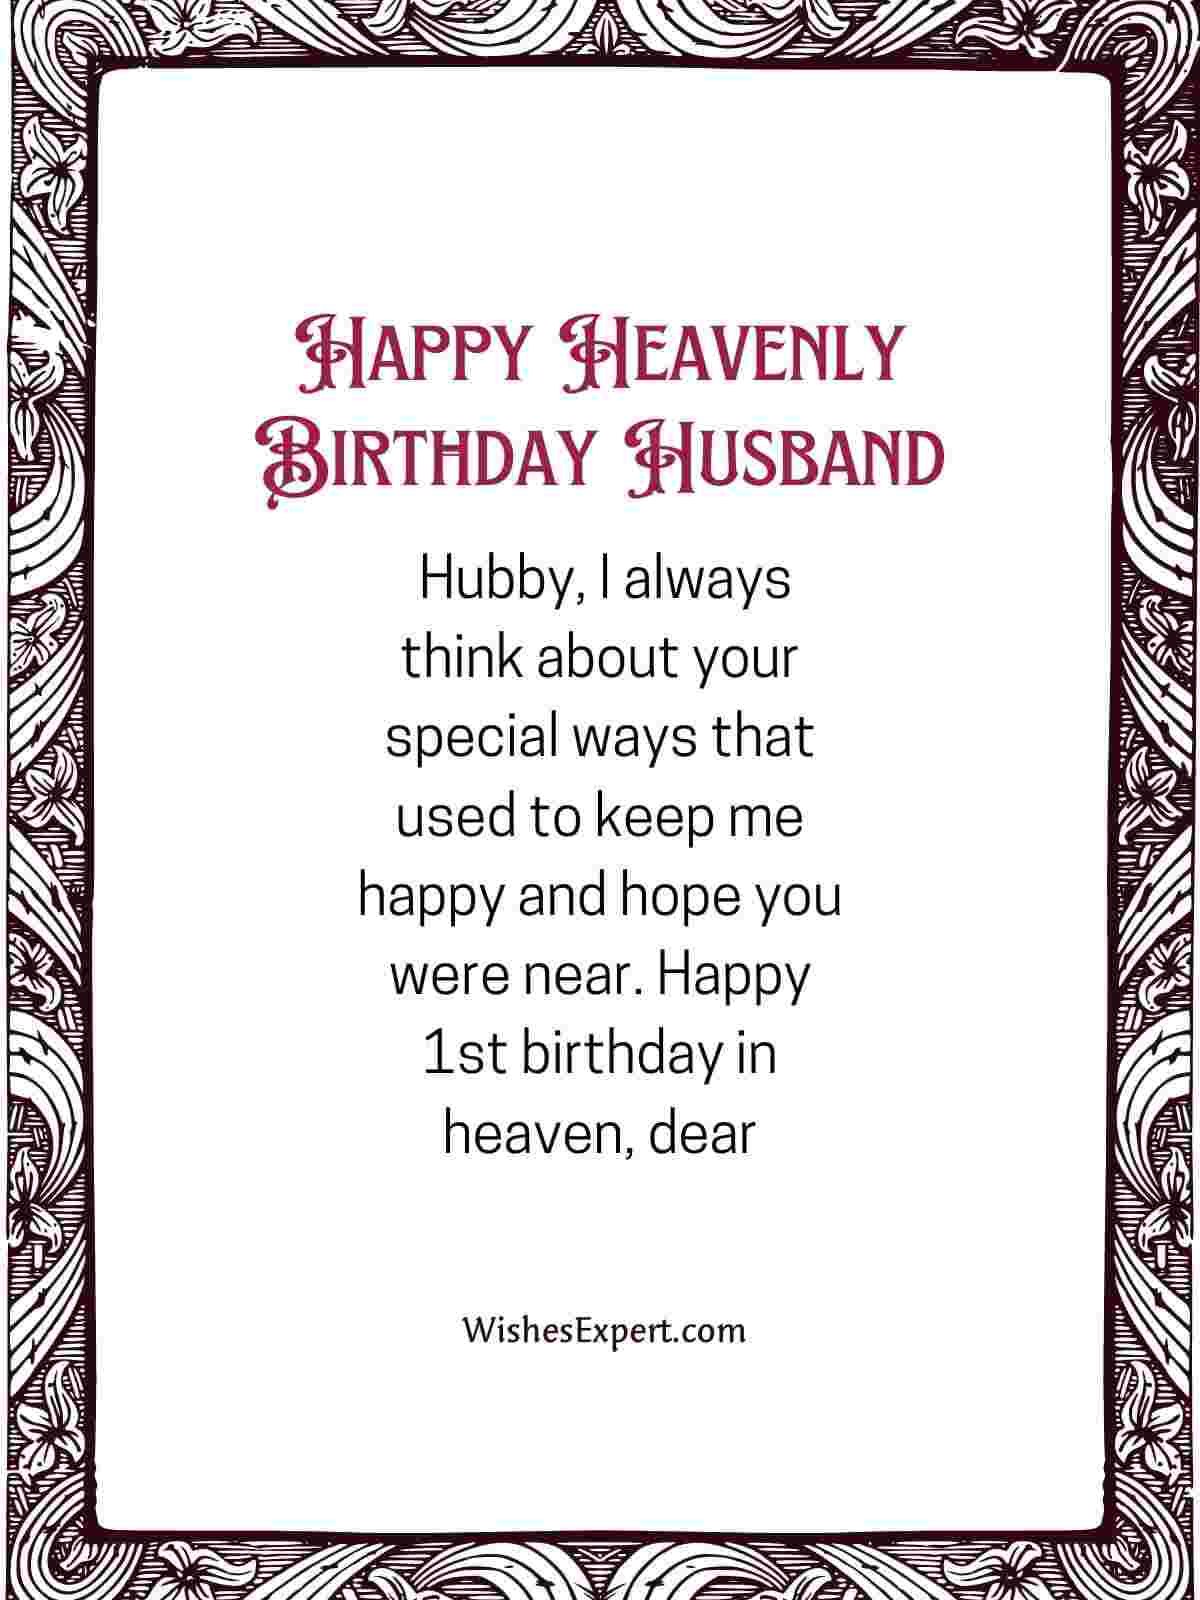 First Birthday In Heaven Husband